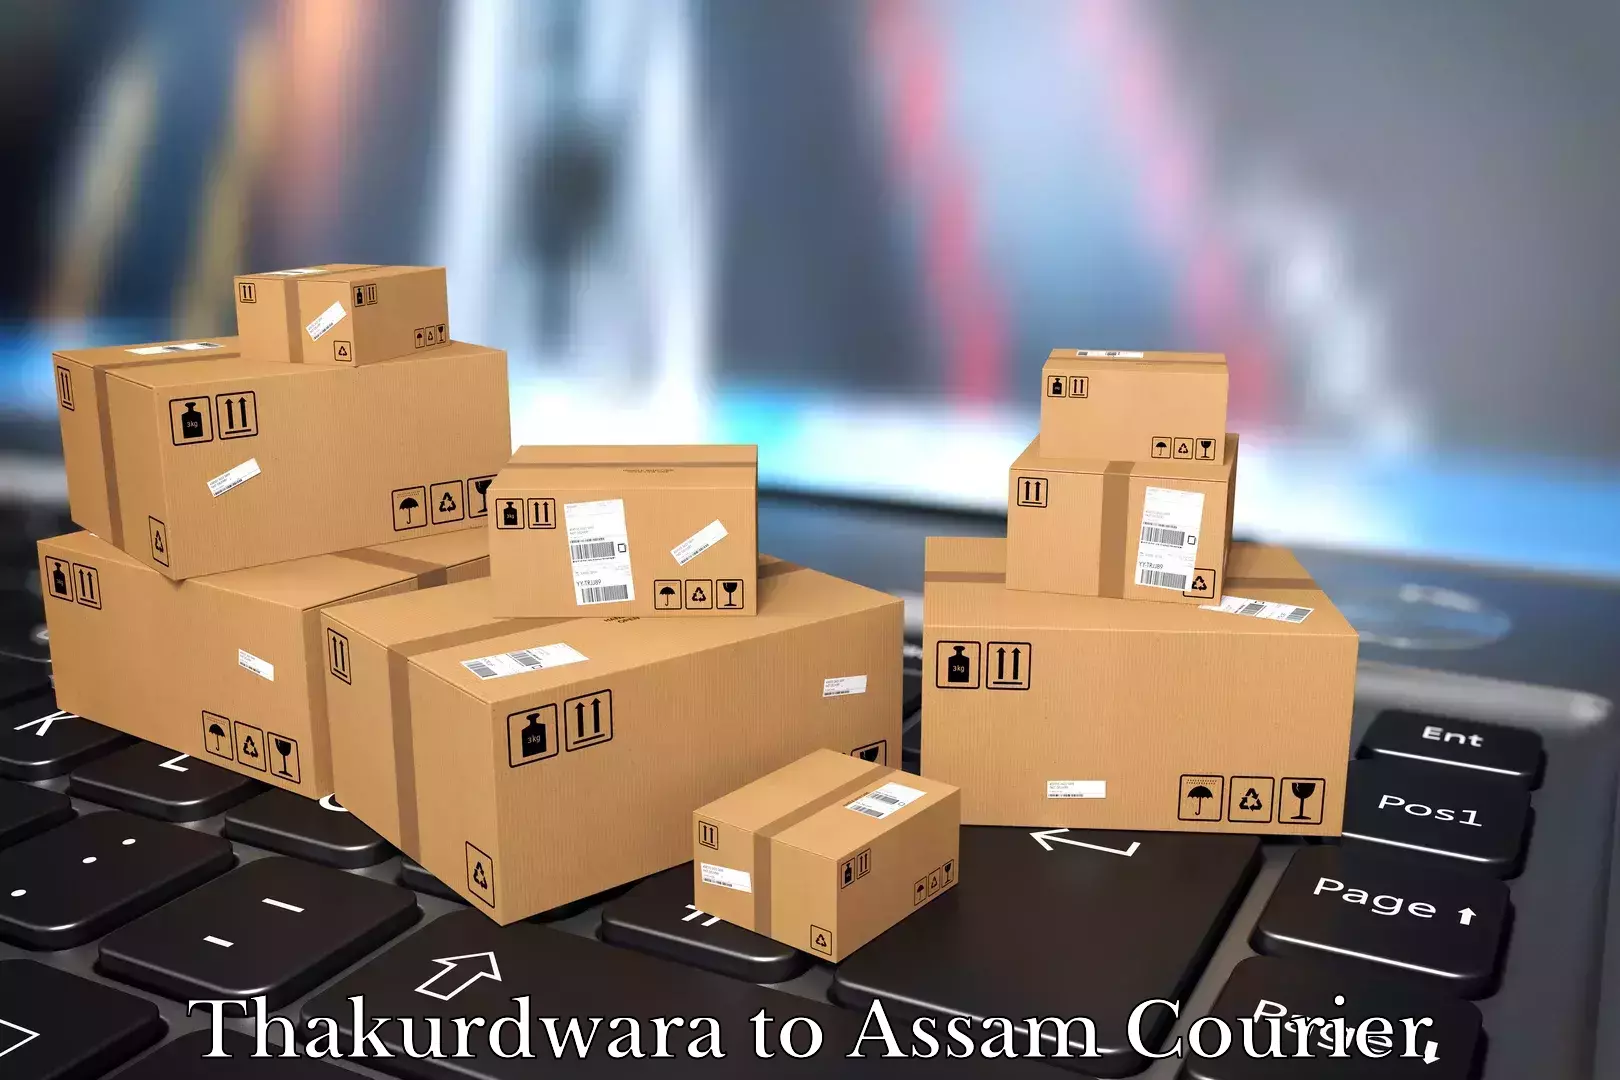 Professional moving assistance Thakurdwara to Lala Assam